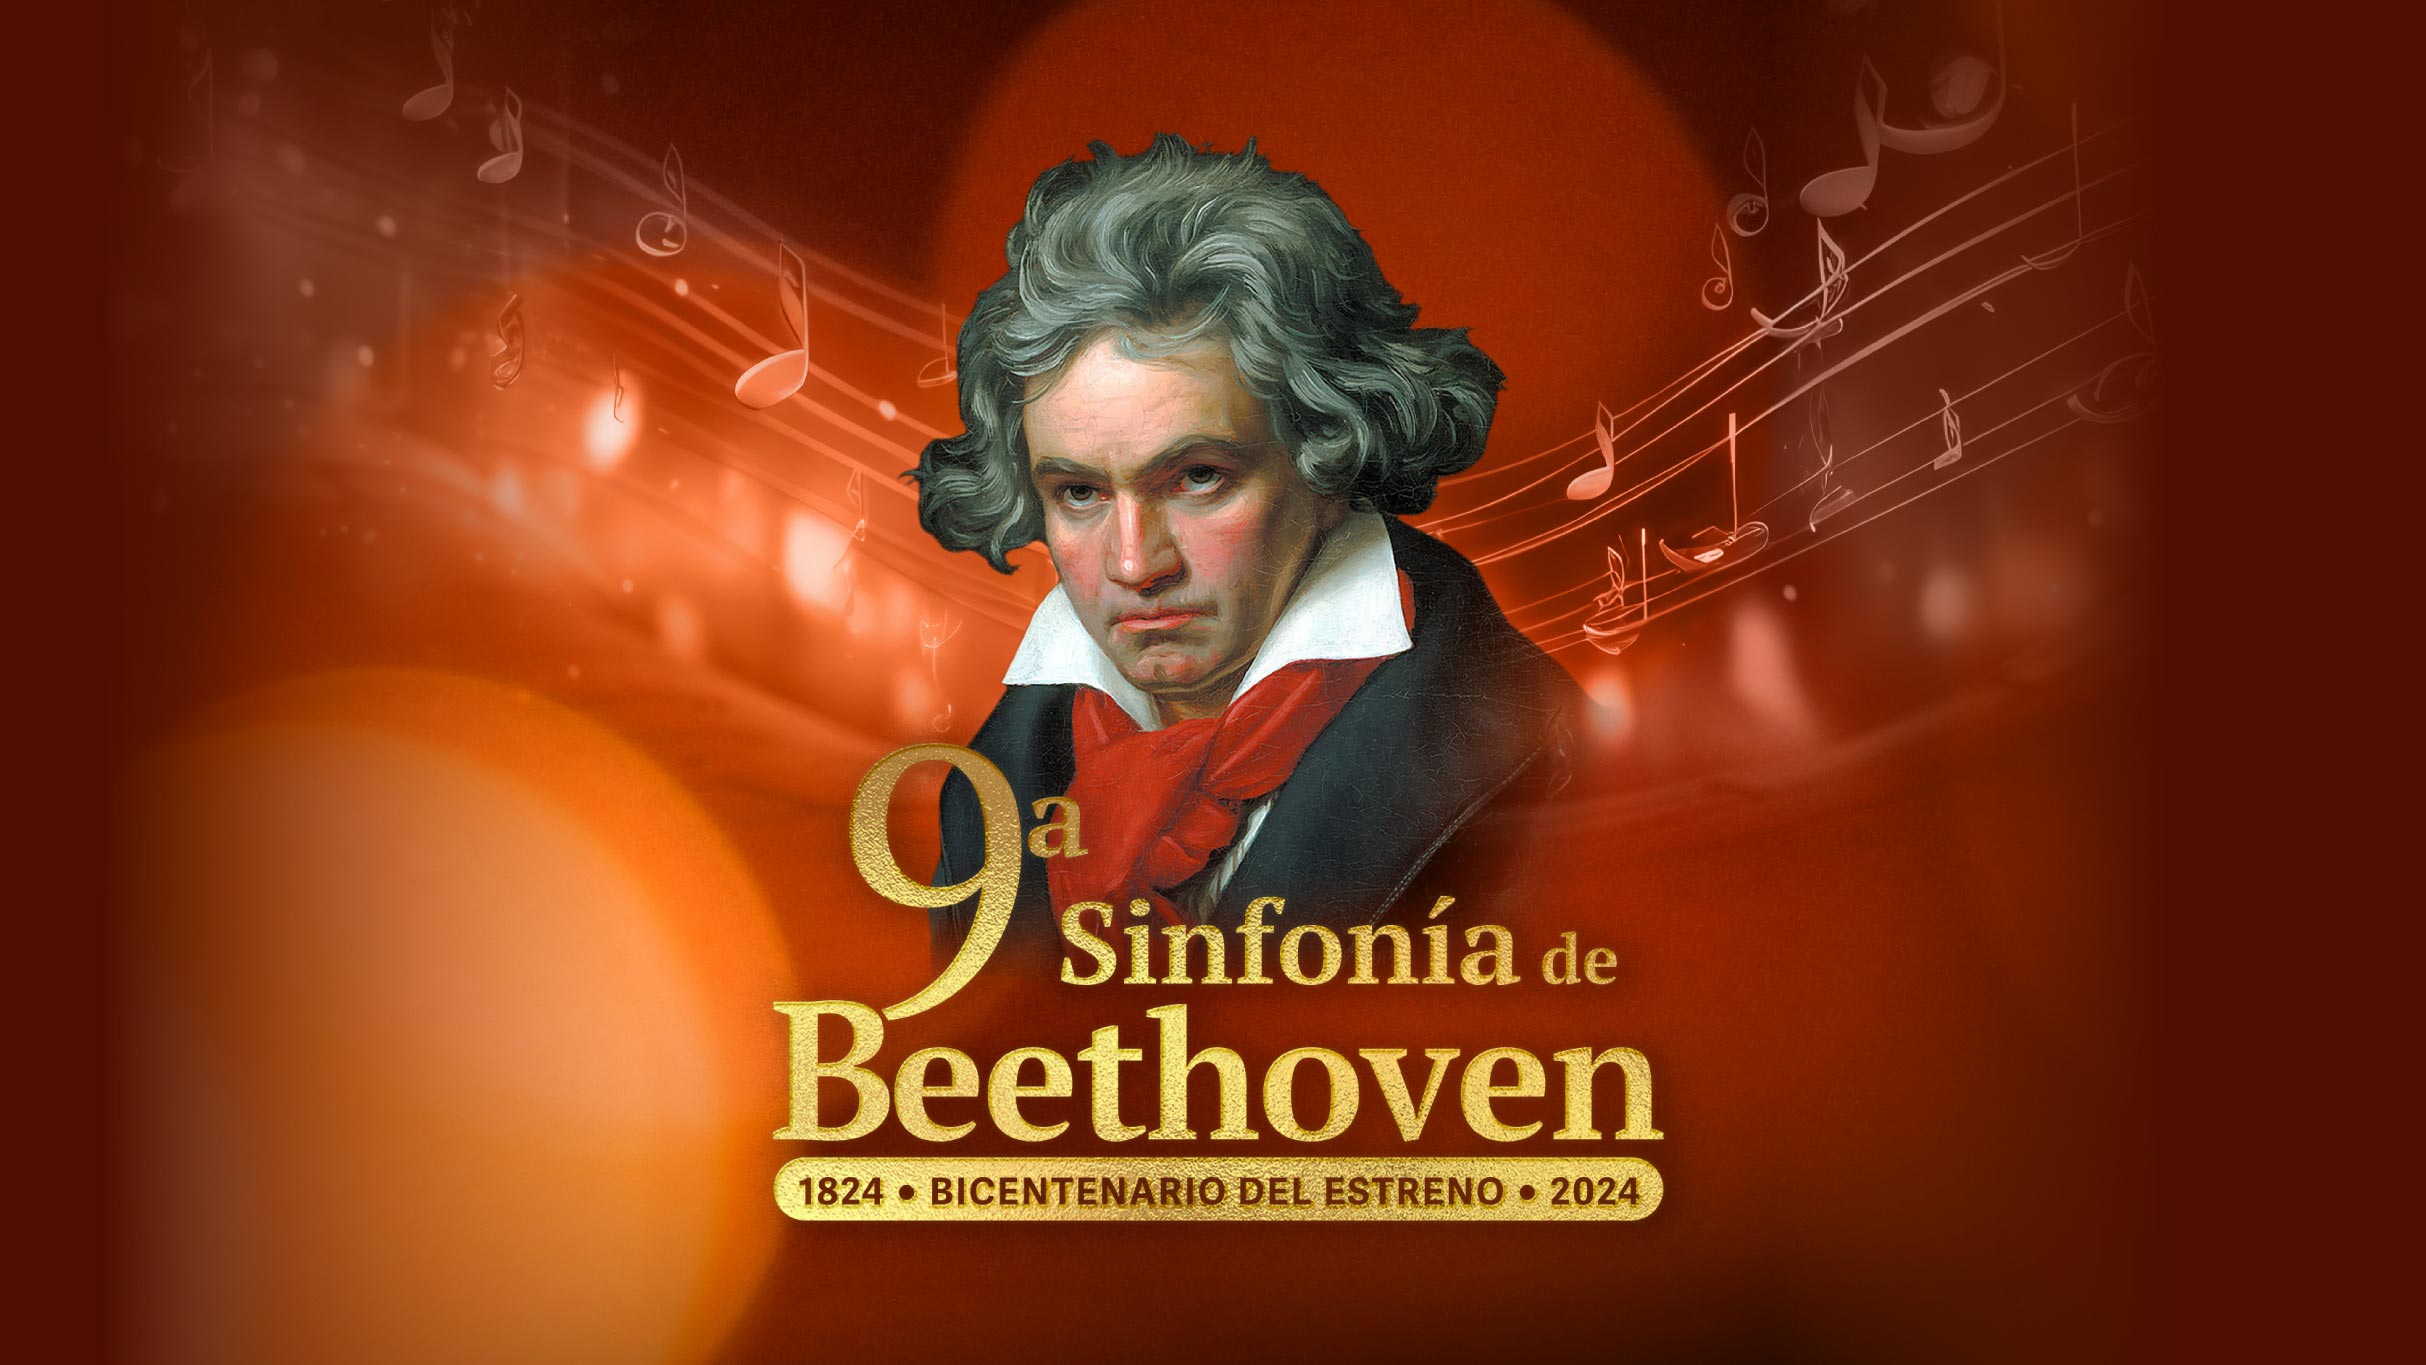 Bicentenario 9a Sinfon&iacute;a de Beethoven presale information on freepresalepasswords.com